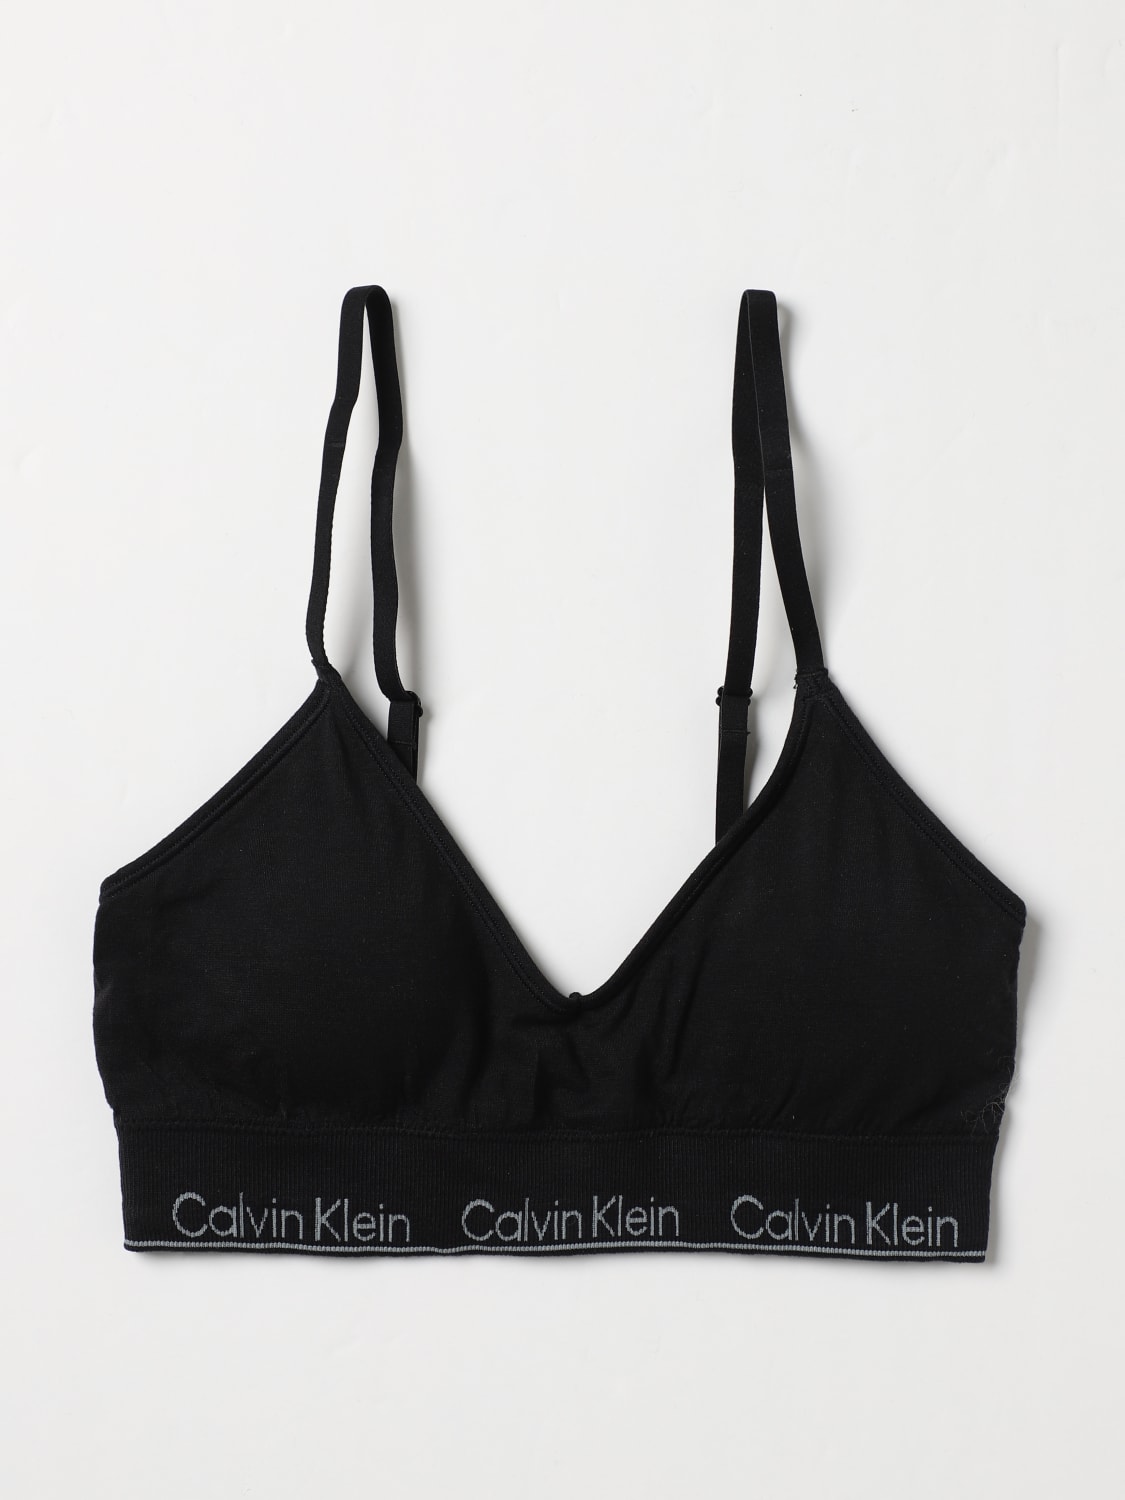 CALVIN KLEIN bra TRIANGLE Black for girls